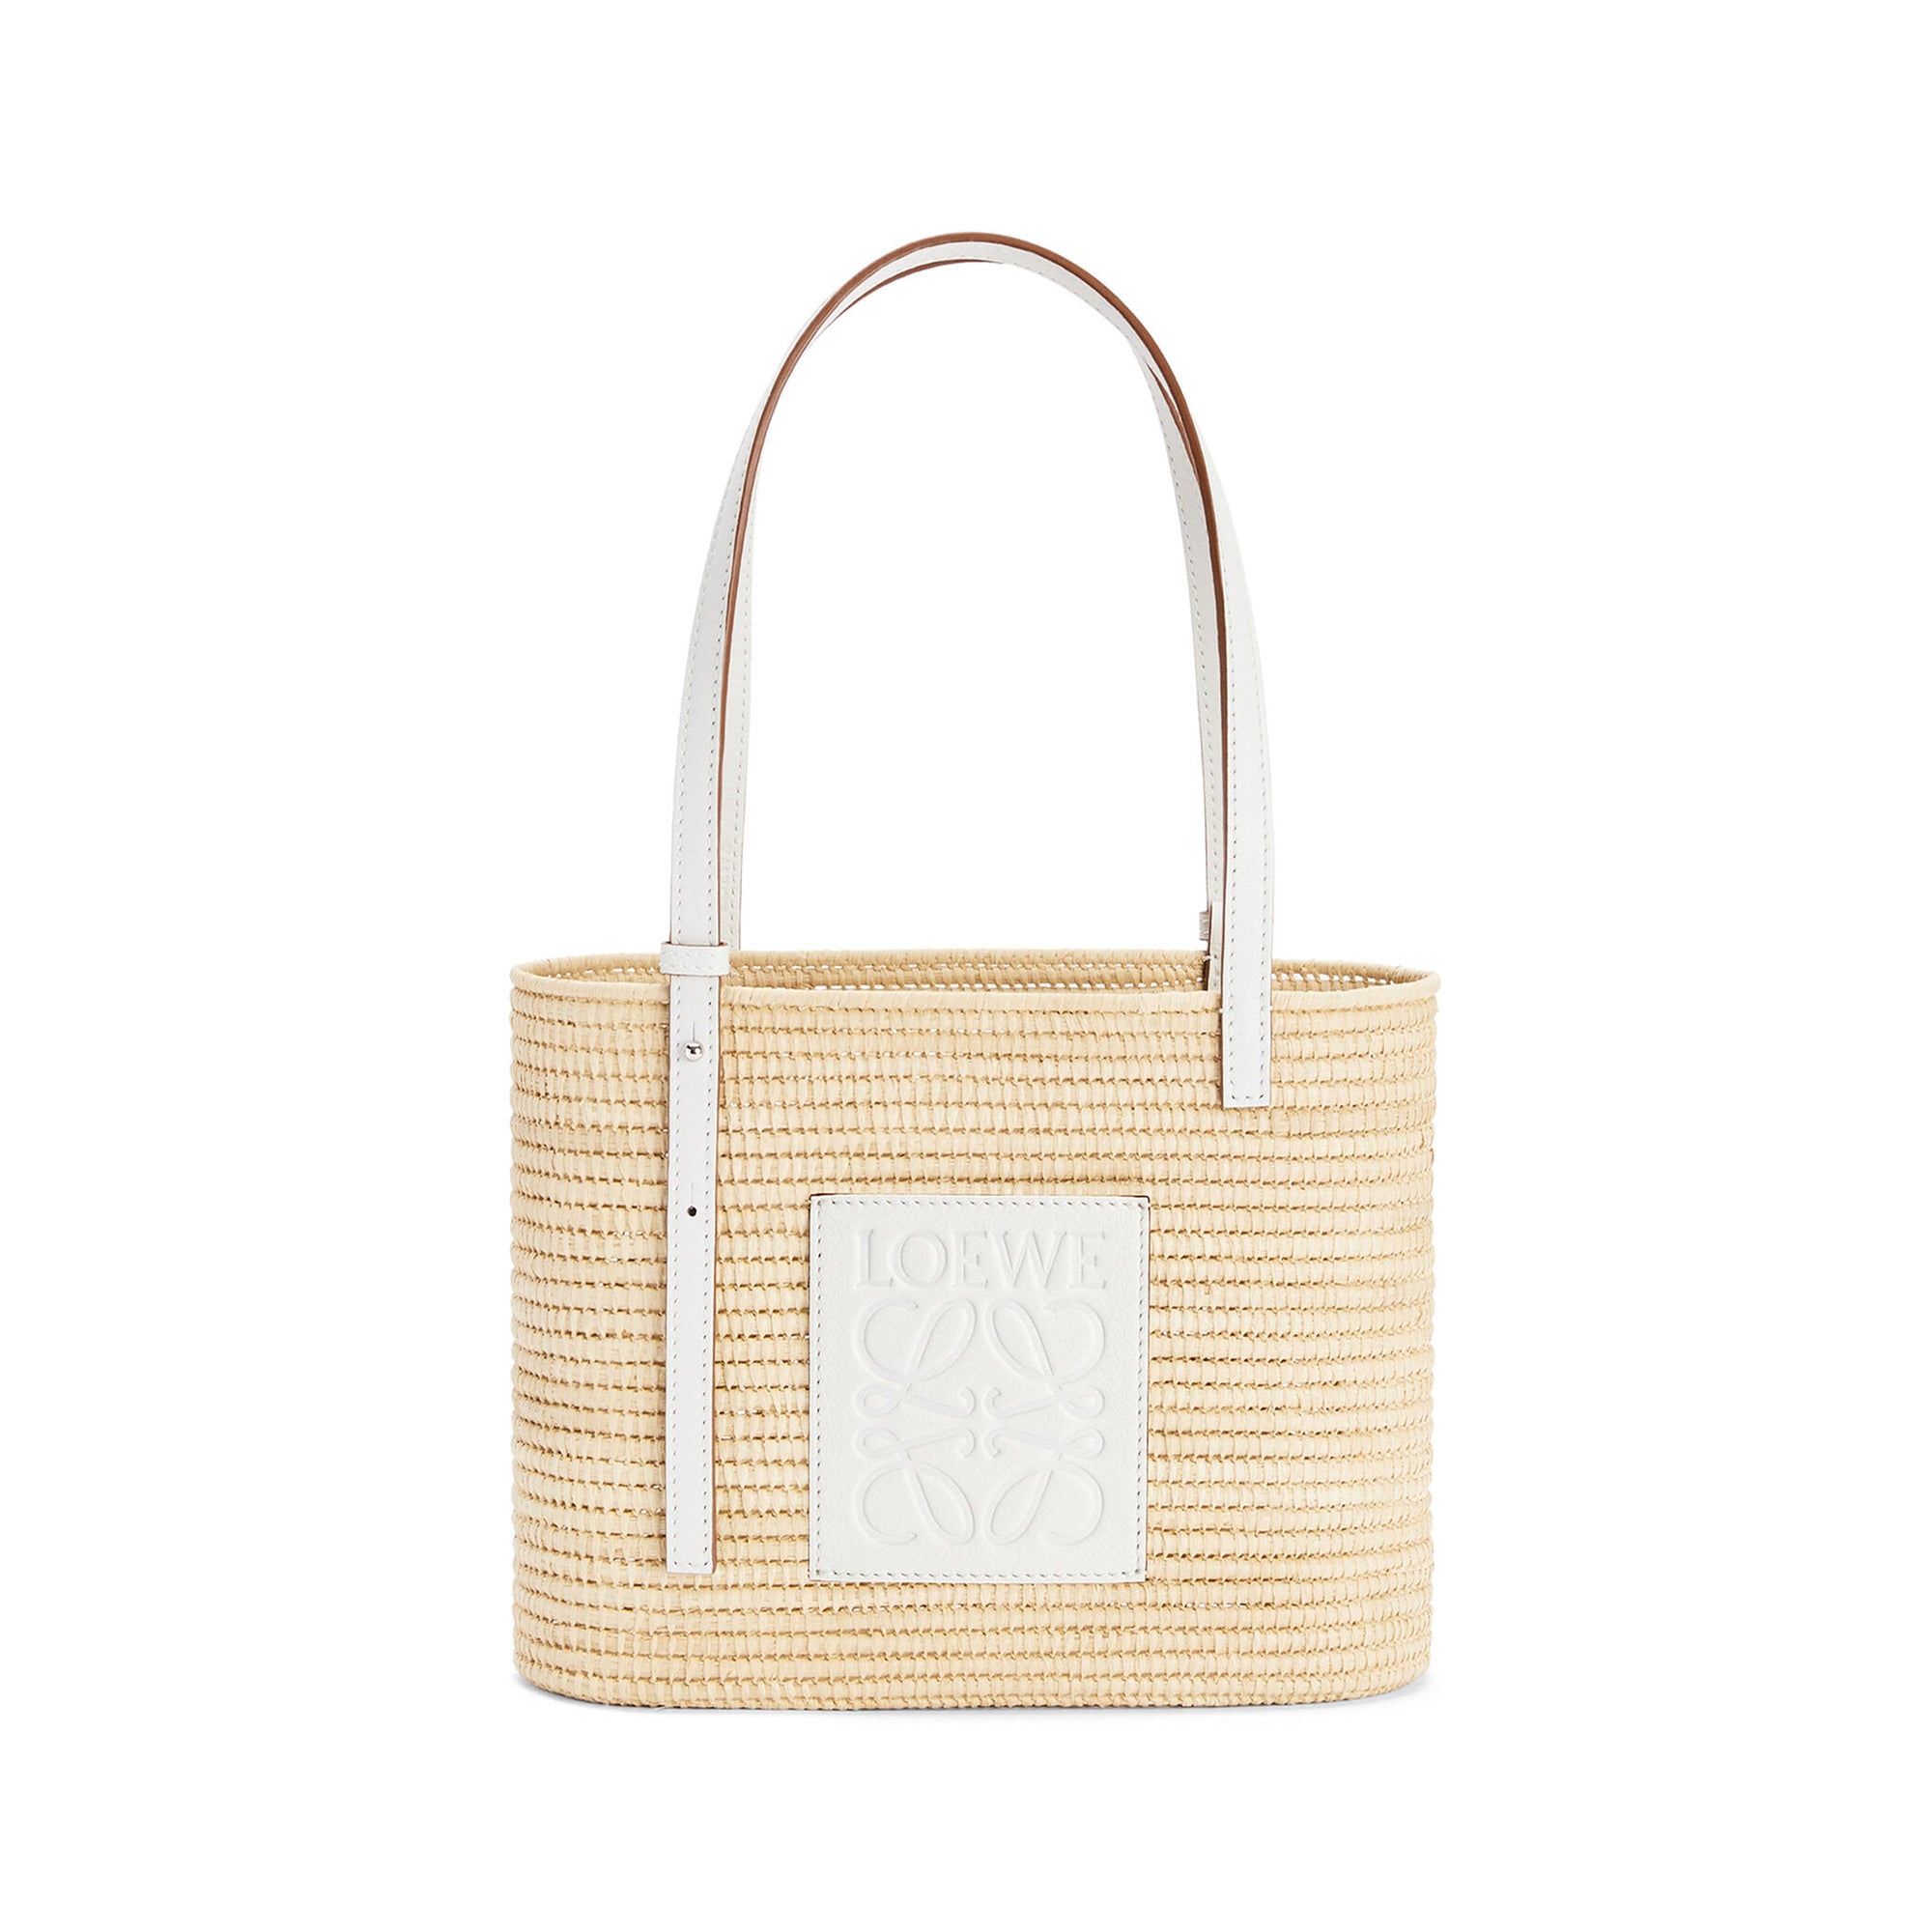 Loewe - Women’s Square Basket Small Bag - (Natural/White) view 1